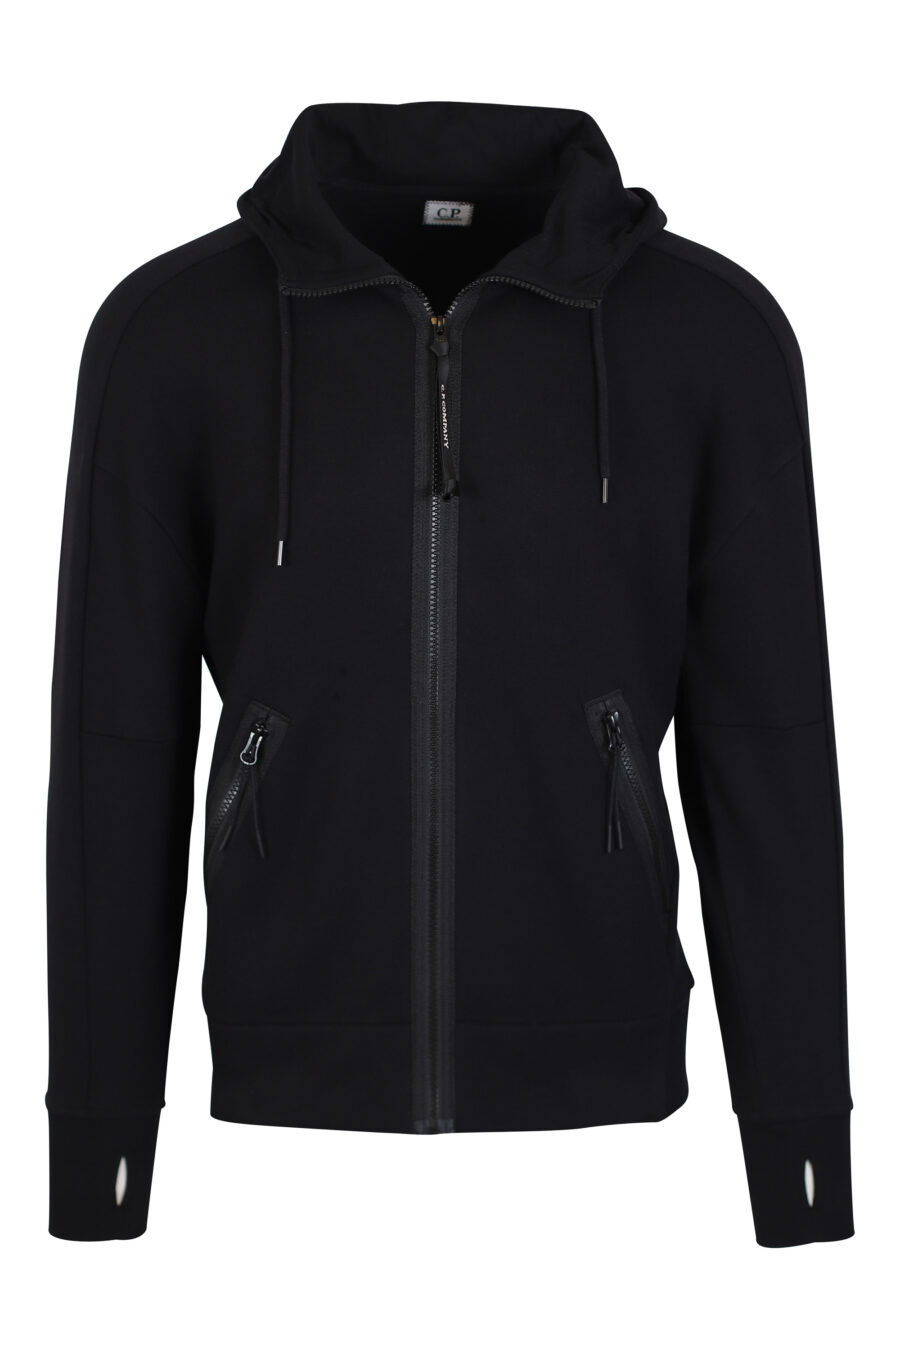 Black sweatshirt with adjustable glasses hood - IMG 2432